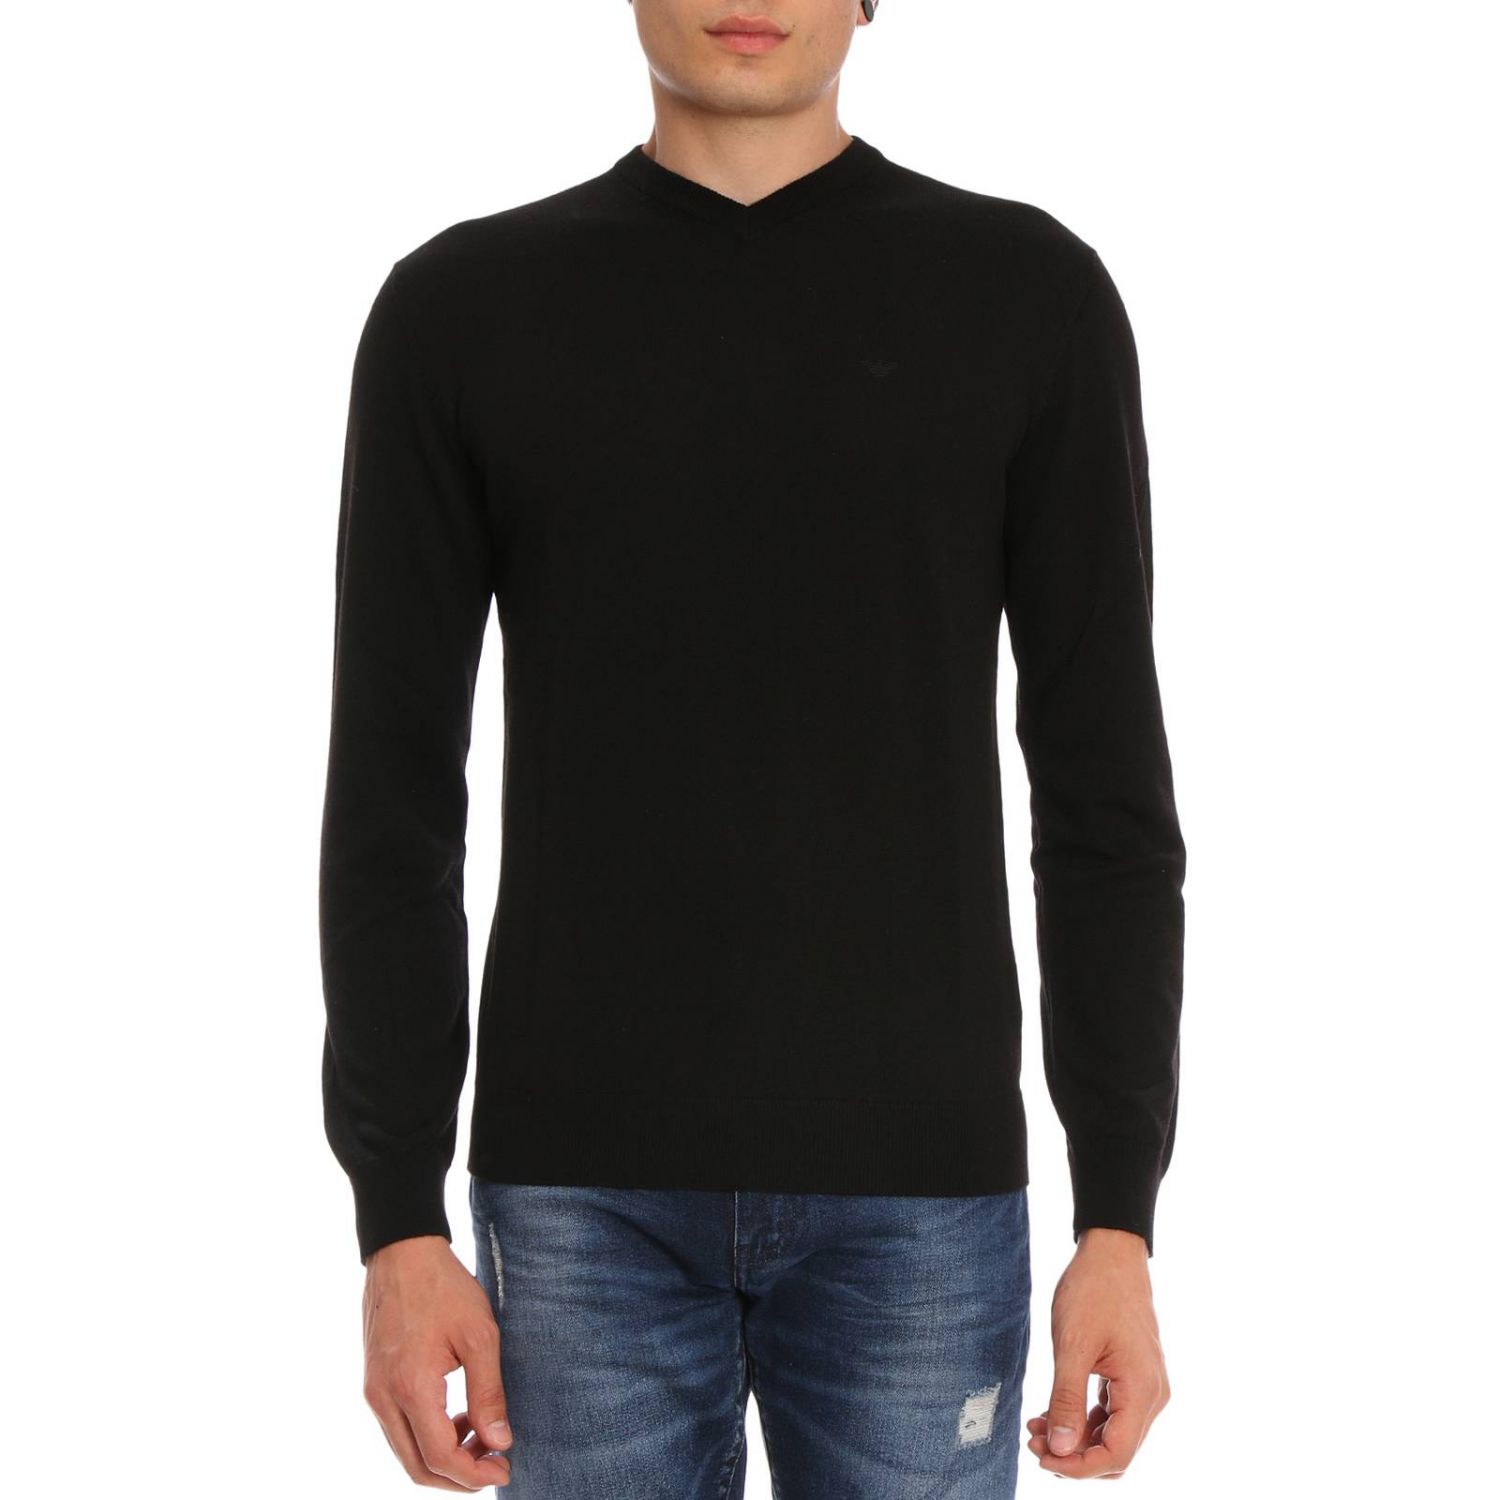 Emporio Armani Outlet: Sweater men | Sweater Emporio Armani Men Black